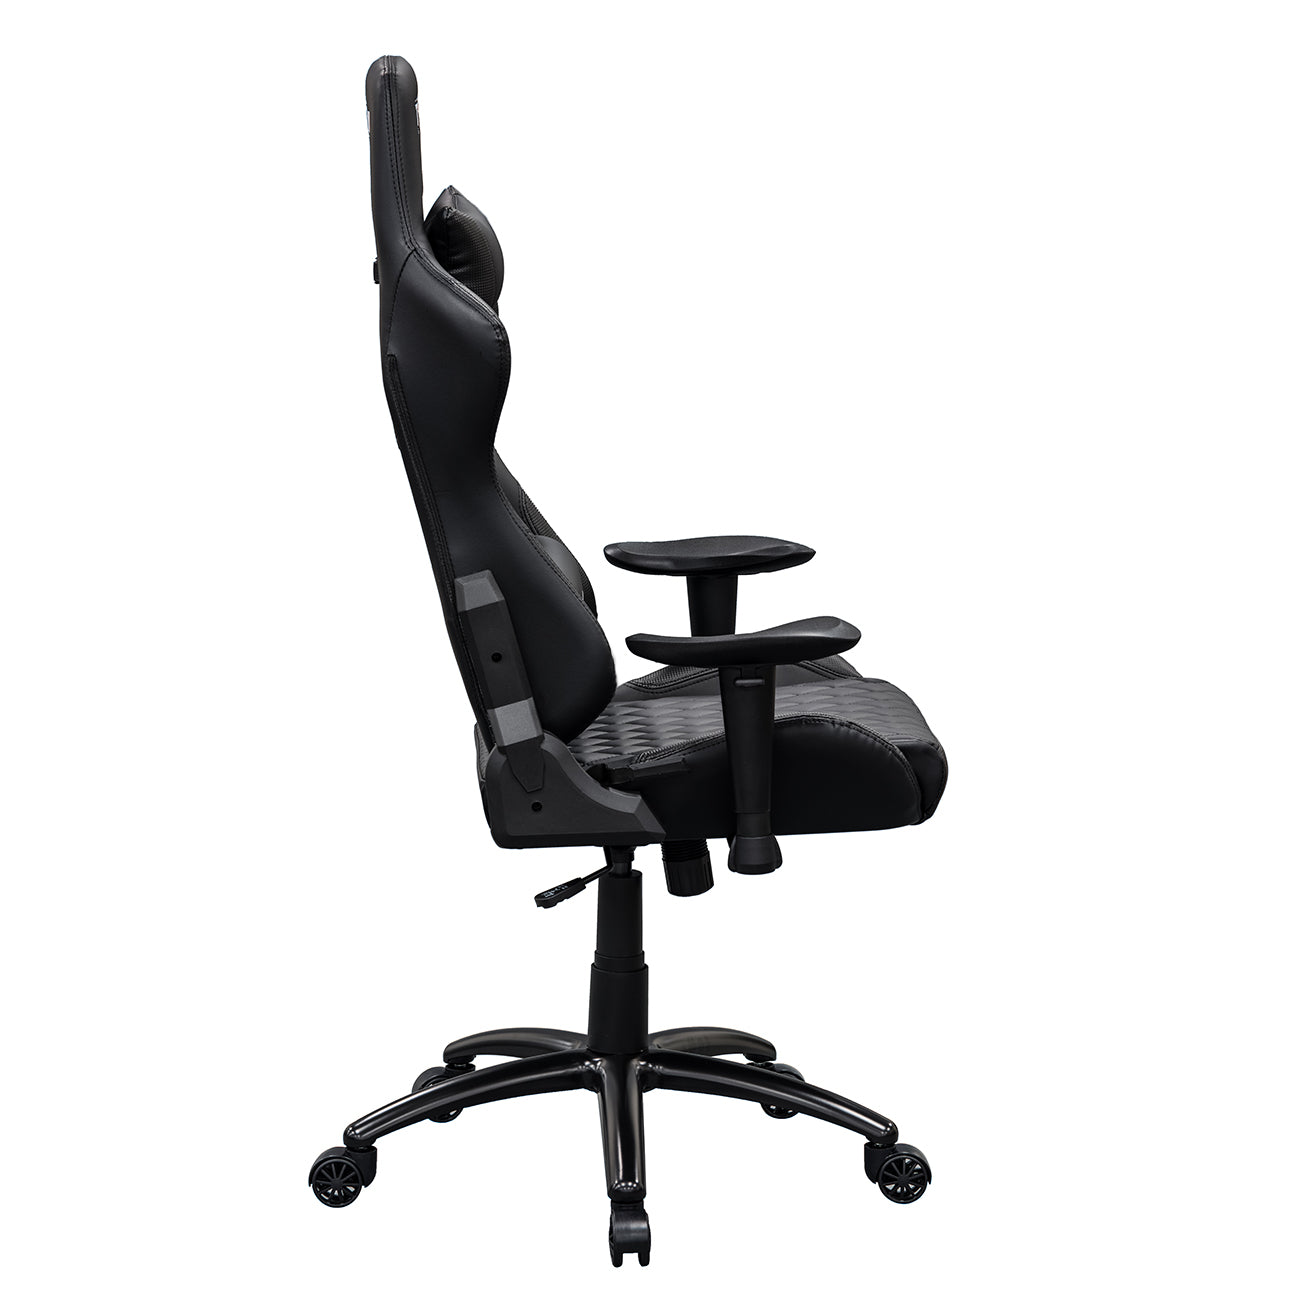 Techni Sport TS-5100 Ergonomic High Back Racer Style PC Gaming Chair, Black